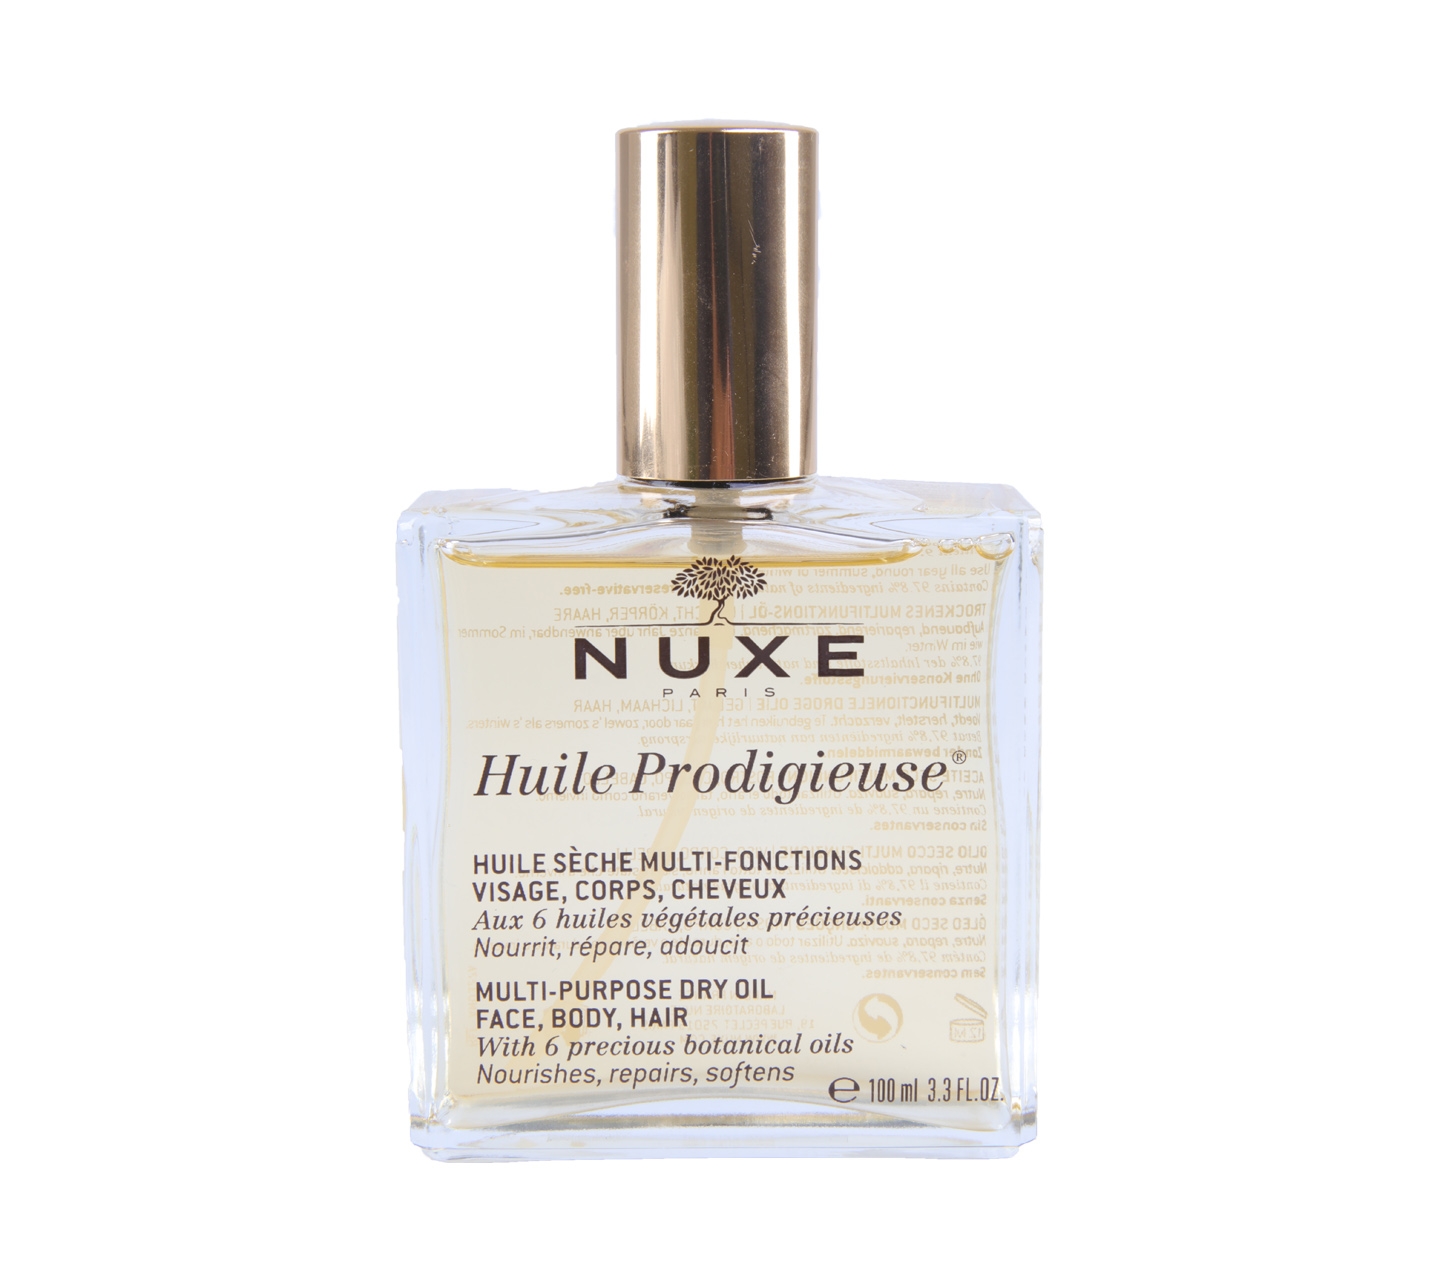 Nuxe Huile Prodigieuse Multi-Purpose Dry Oil Face, Body, Hair Faces